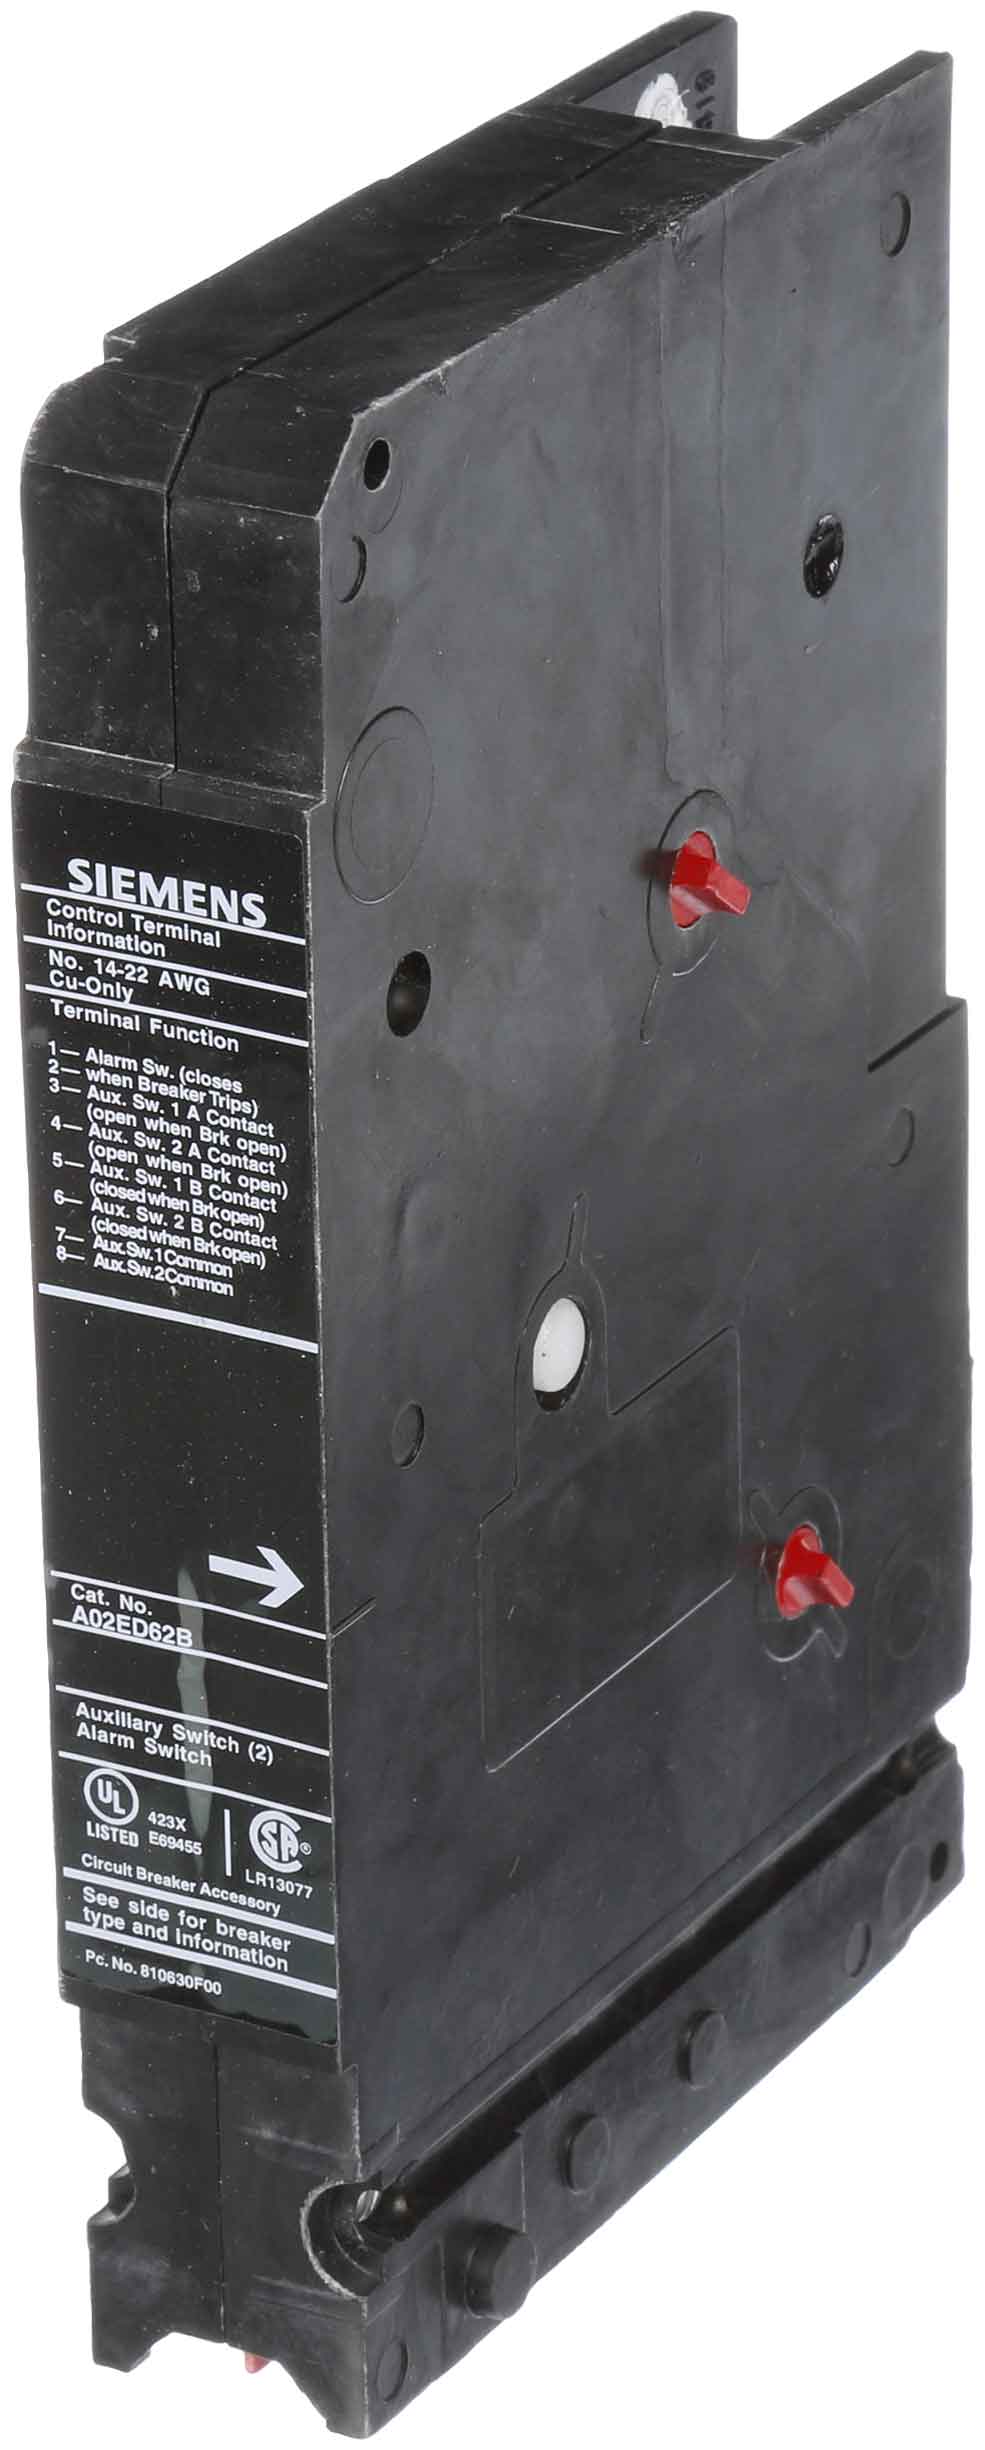 A02ED62B - Siemens - Auxiliary Switch